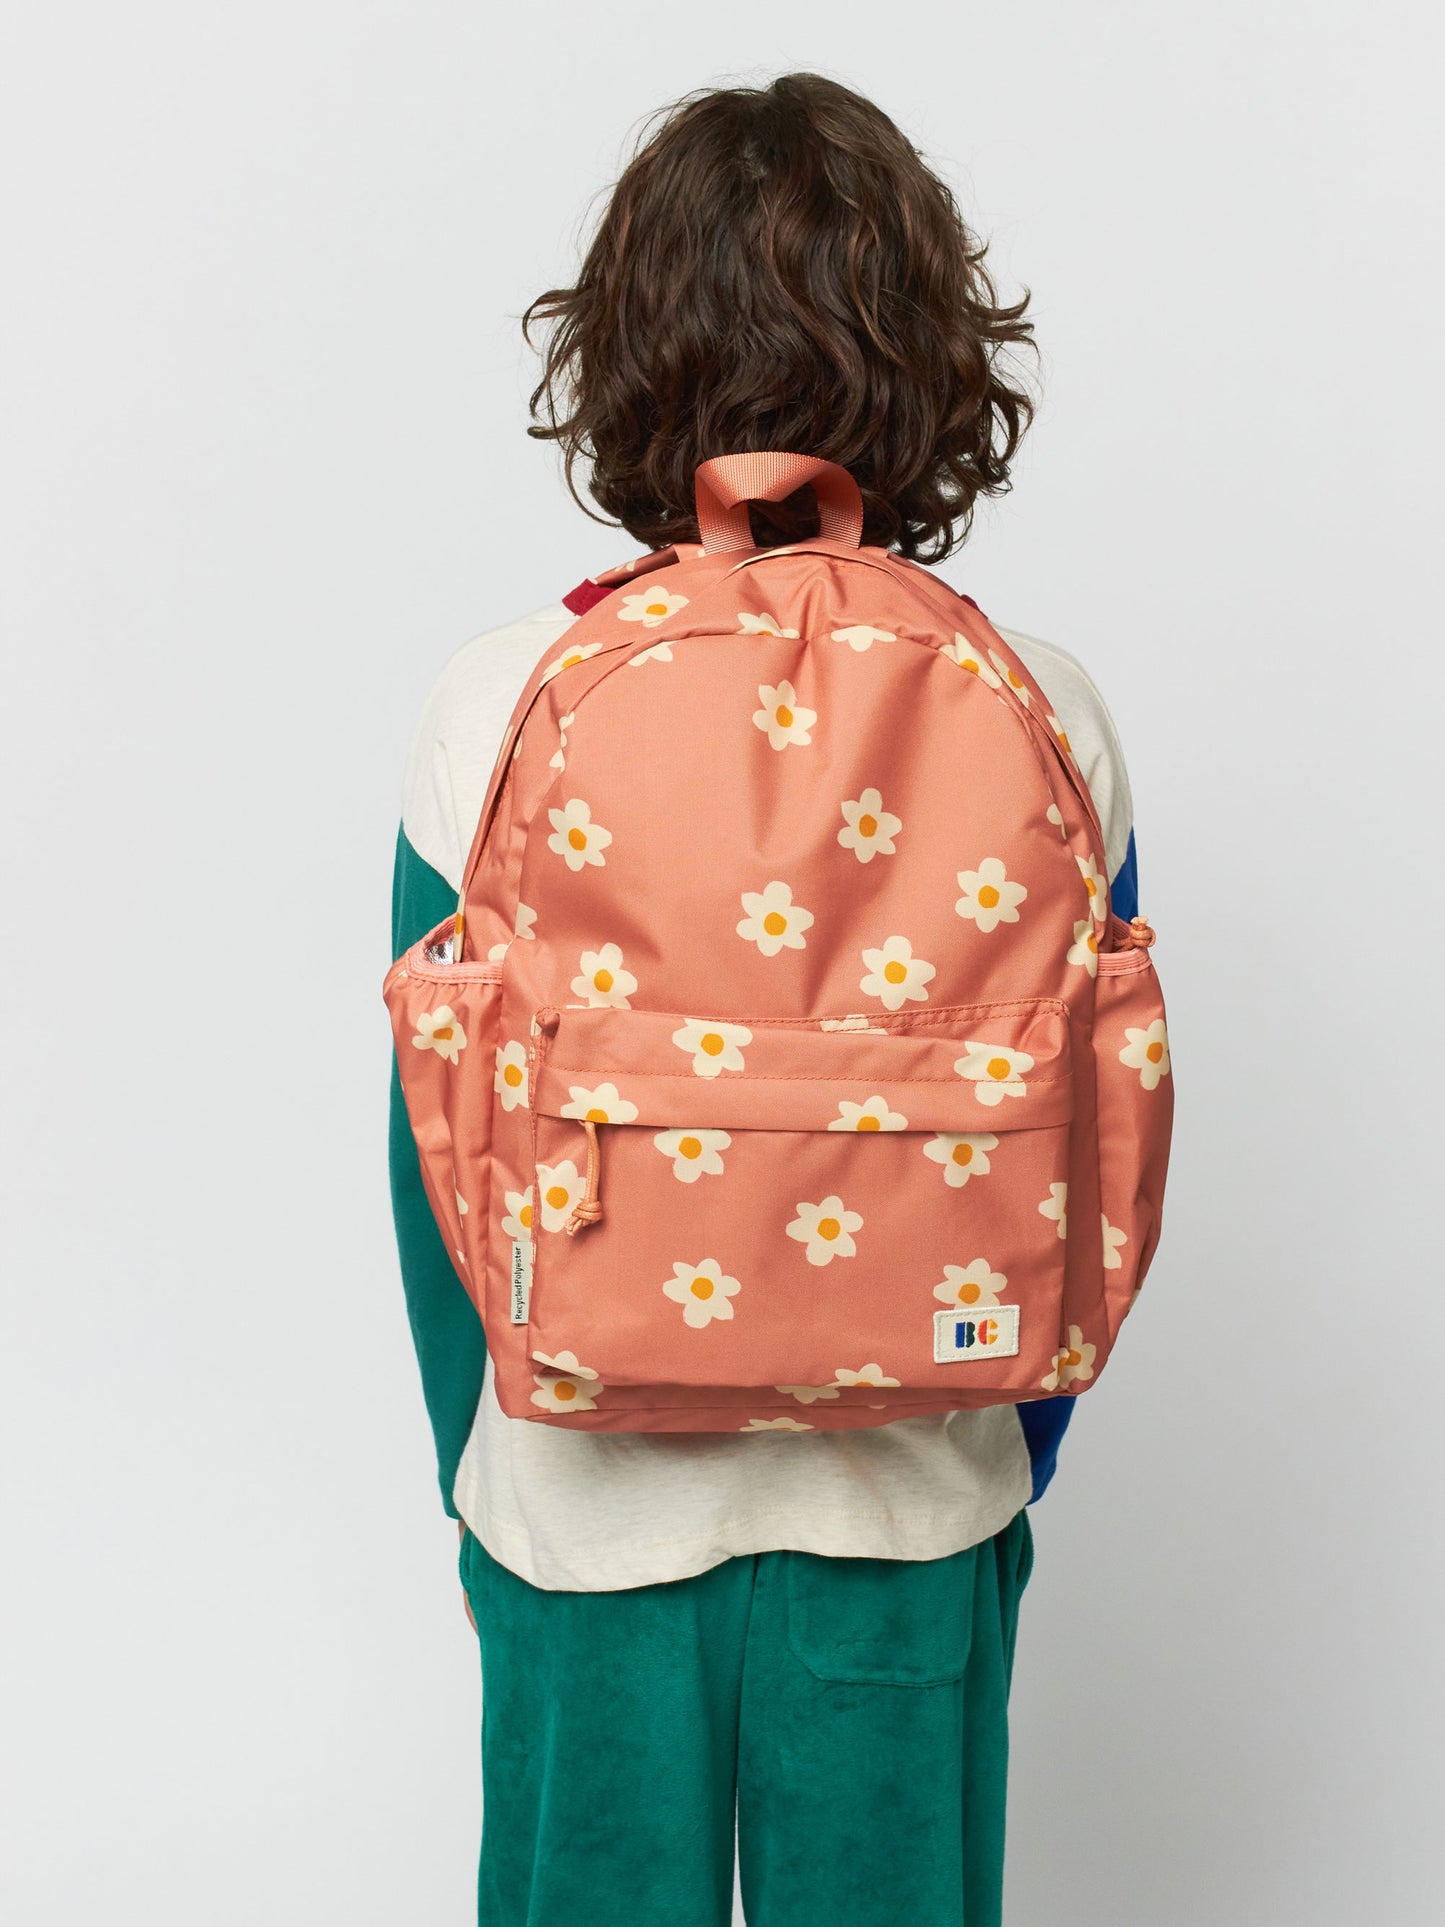 Little Flowers backpack